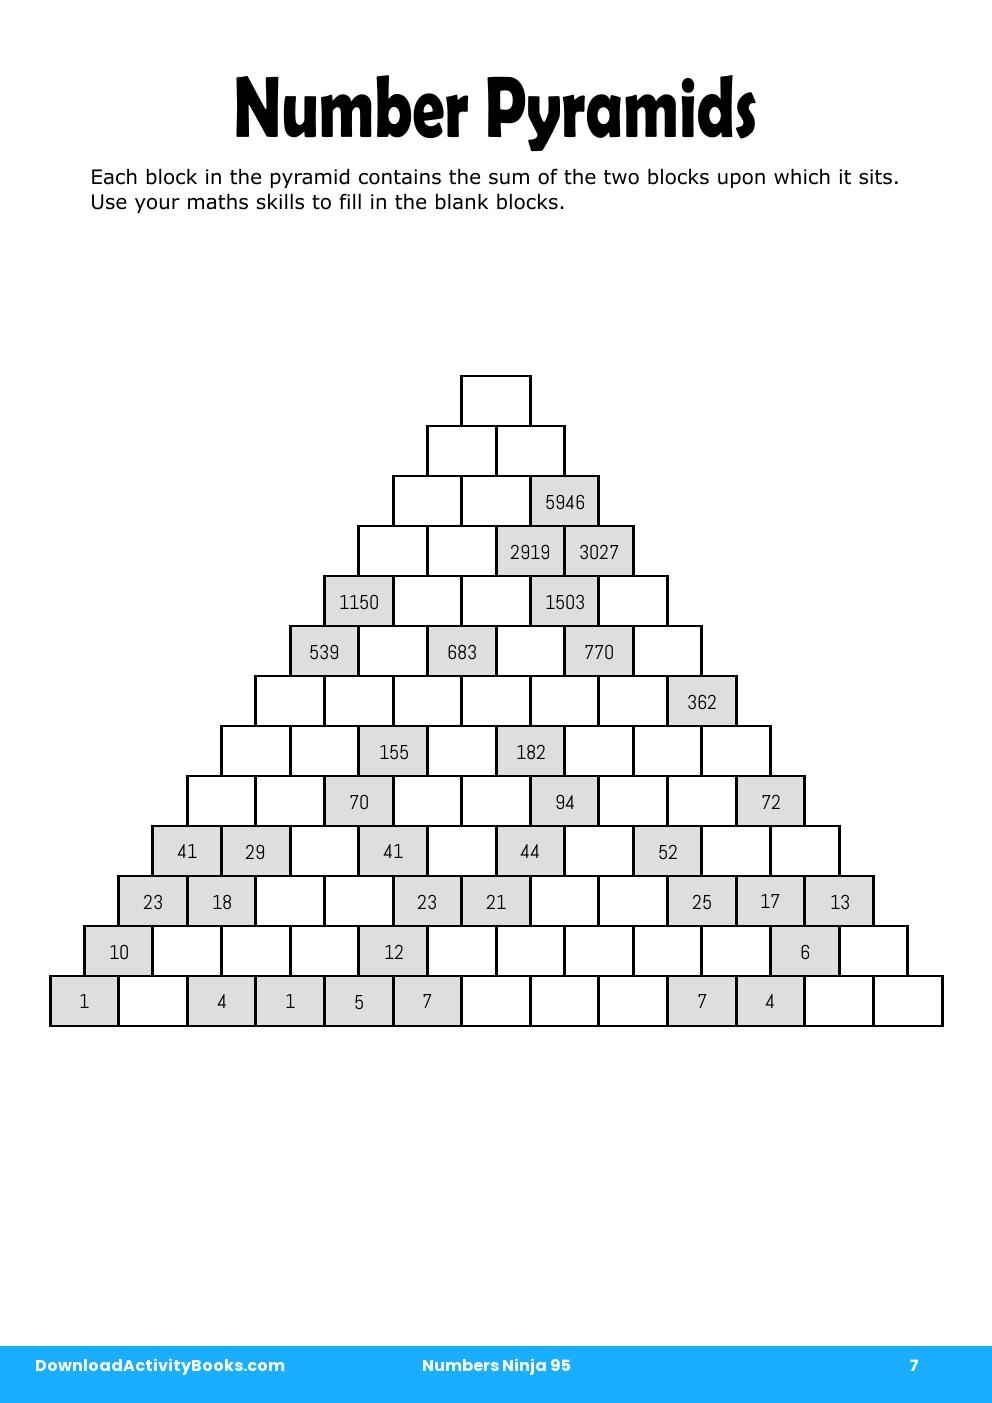 Number Pyramids in Numbers Ninja 95